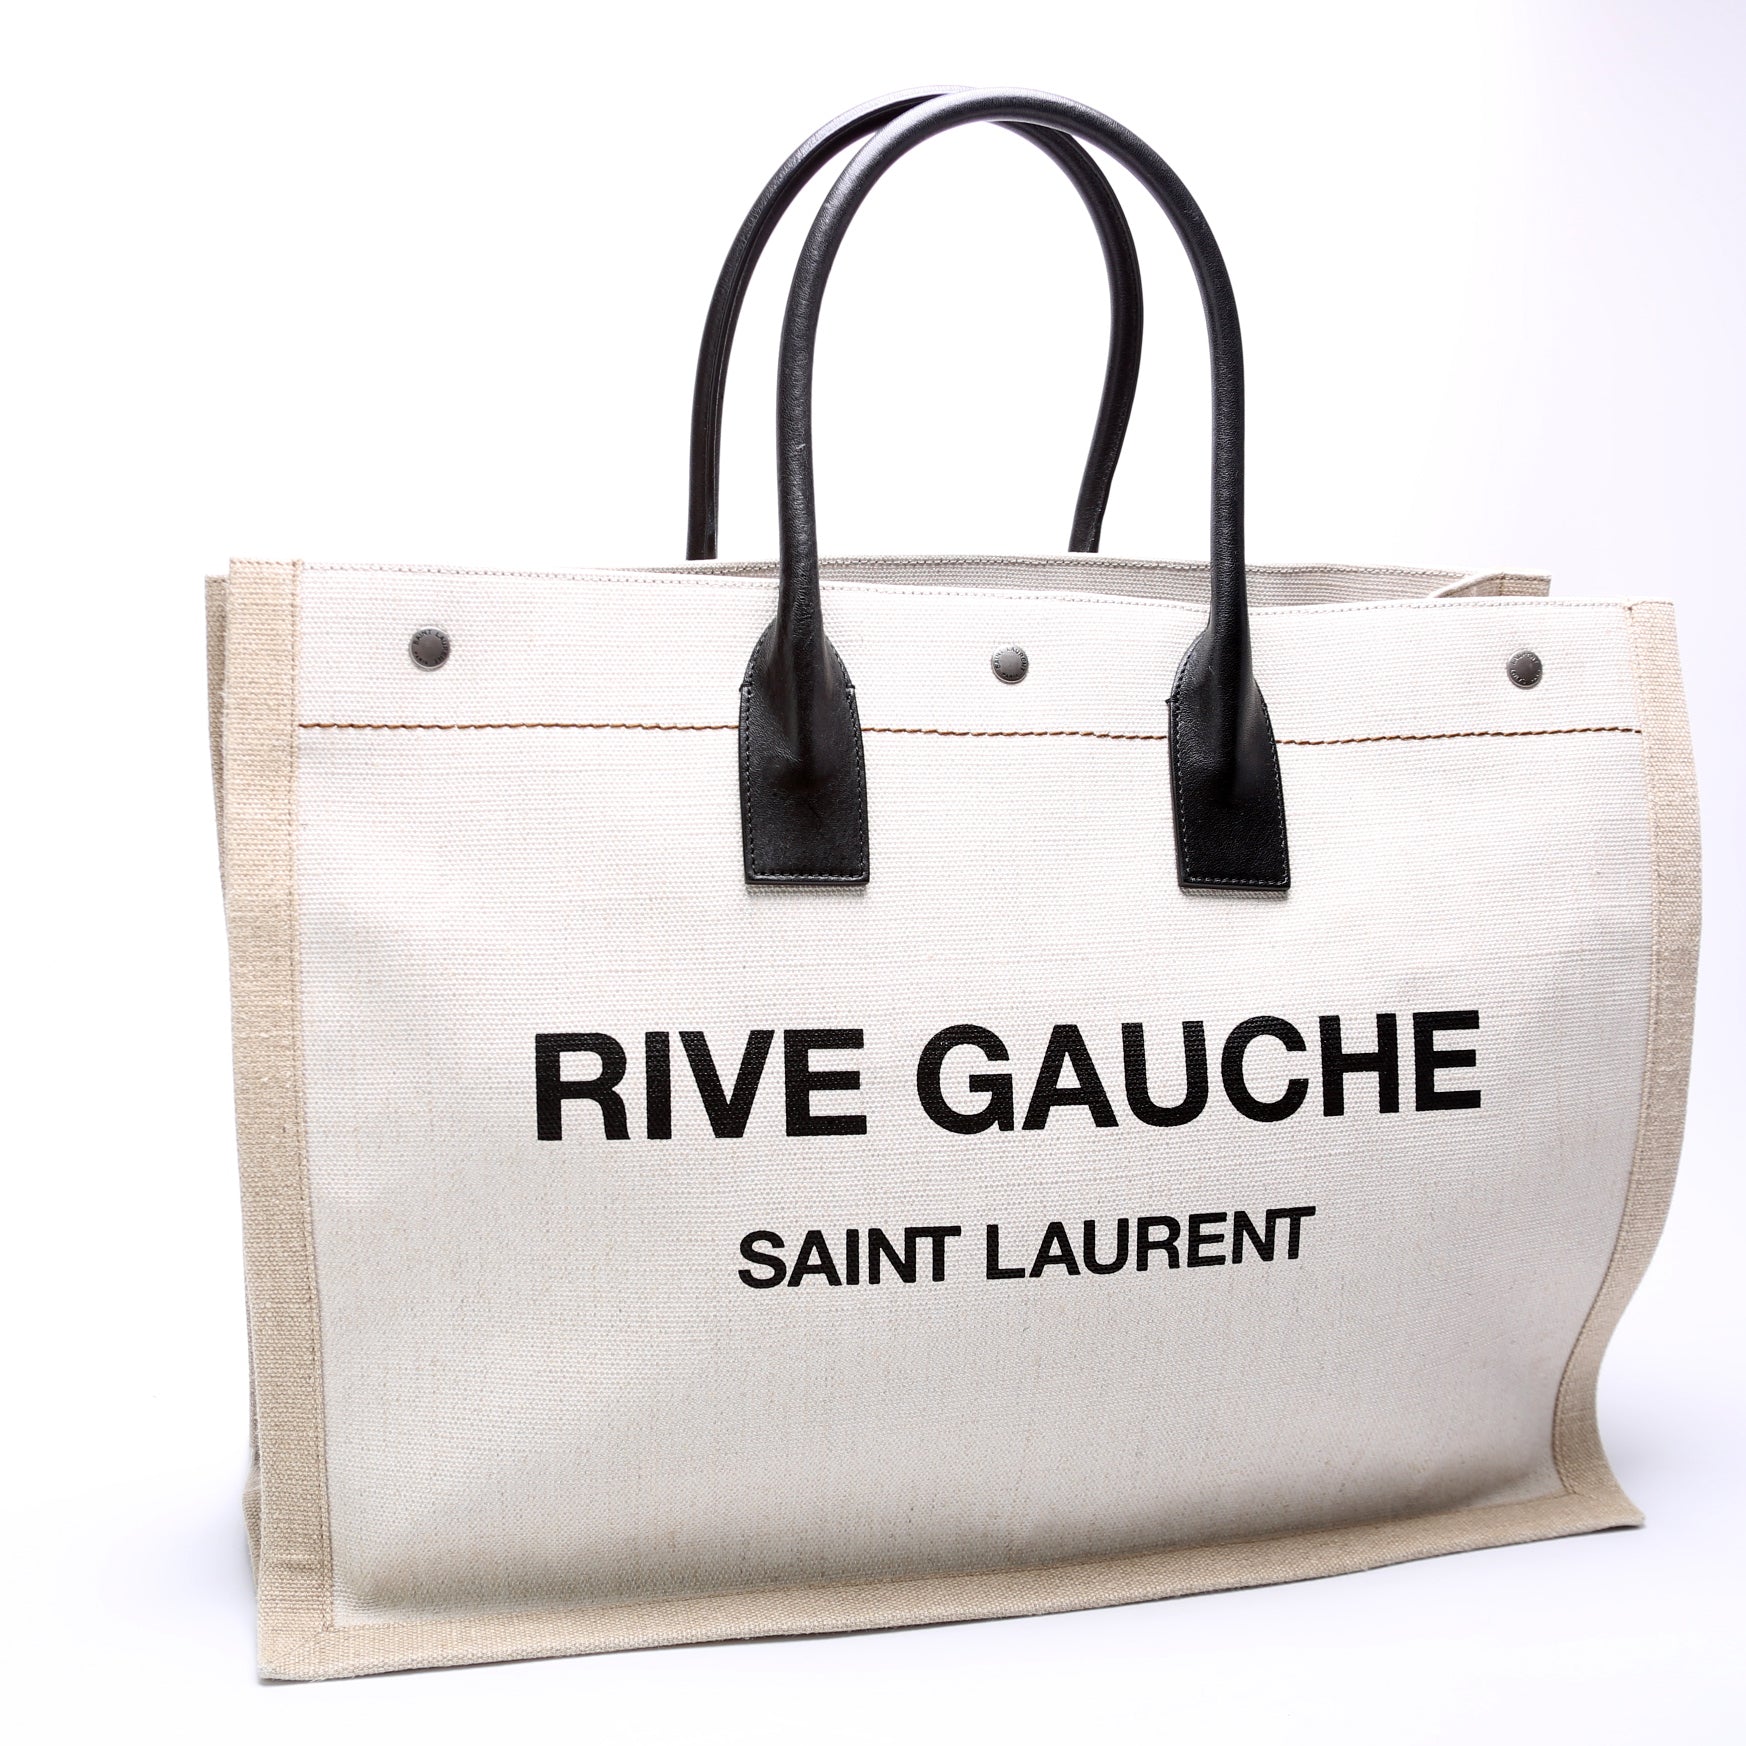 Saint Laurent Rive Gauche Tote in Off White & Black